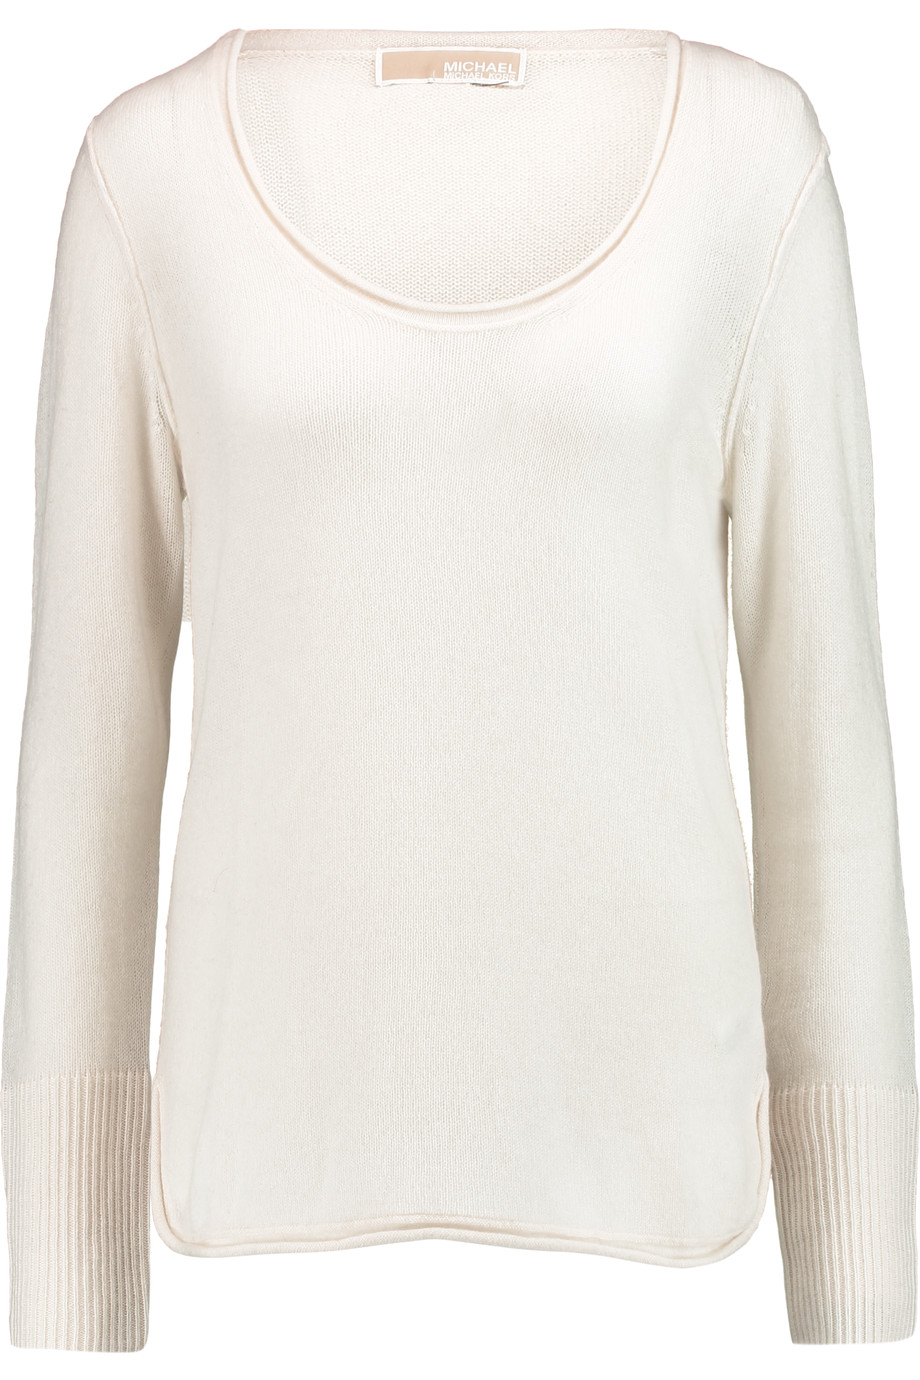 Michael Michael Kors Cashmere Sweater | ModeSens